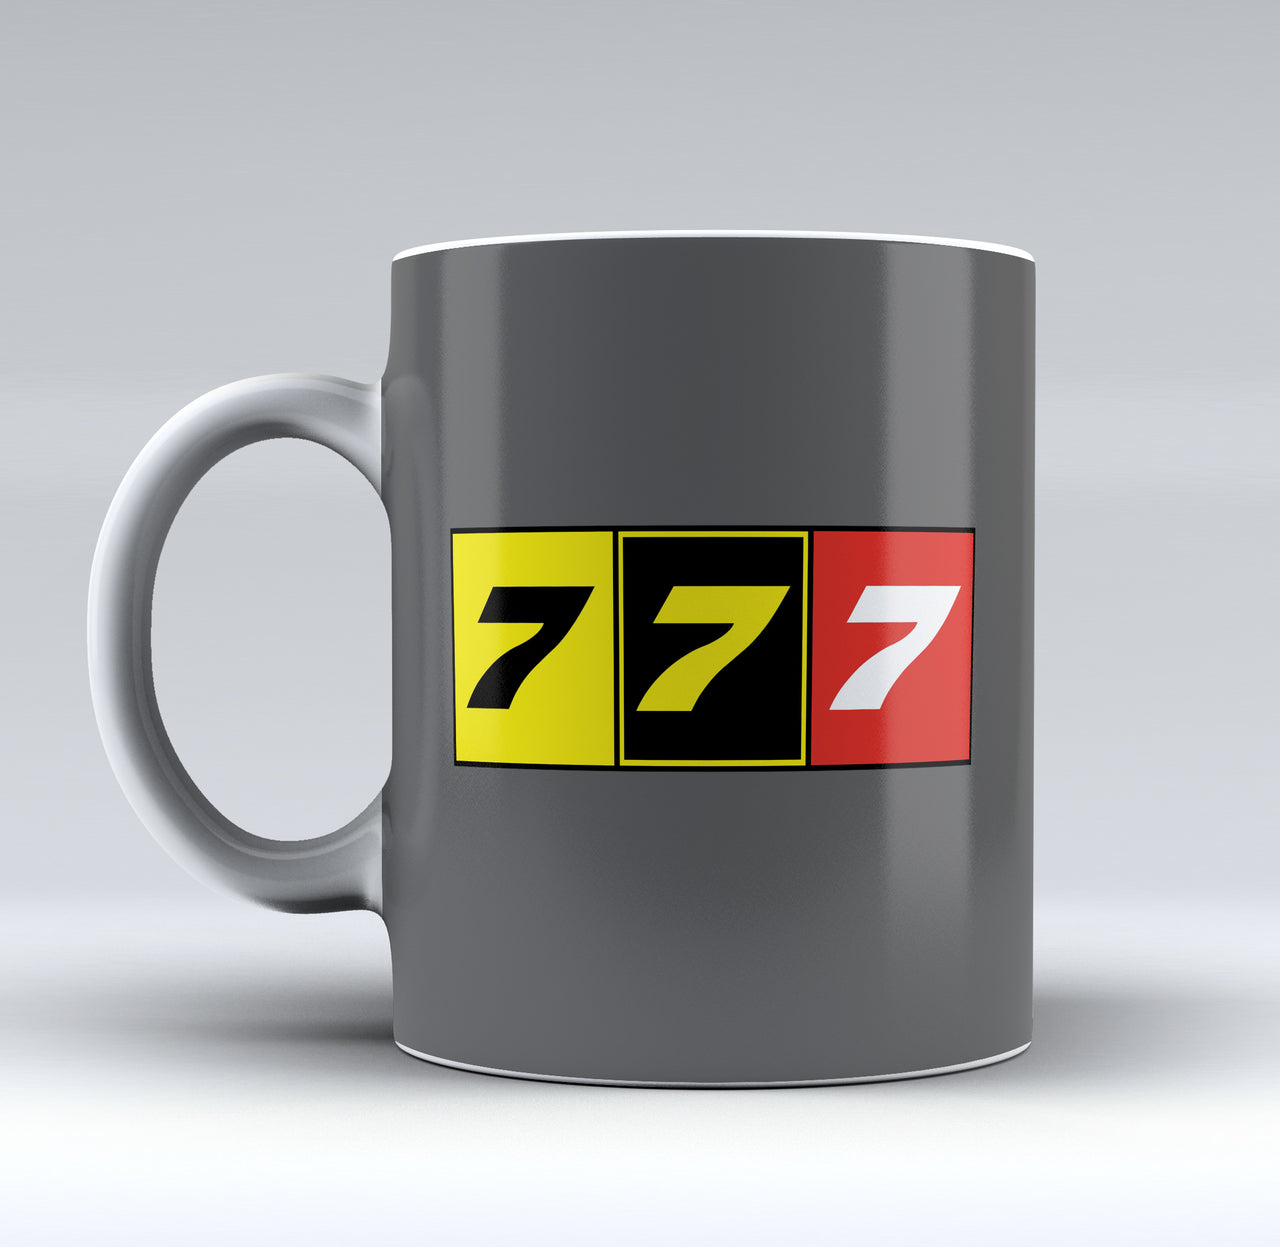 Flat Colourful 777 Designed Mugs